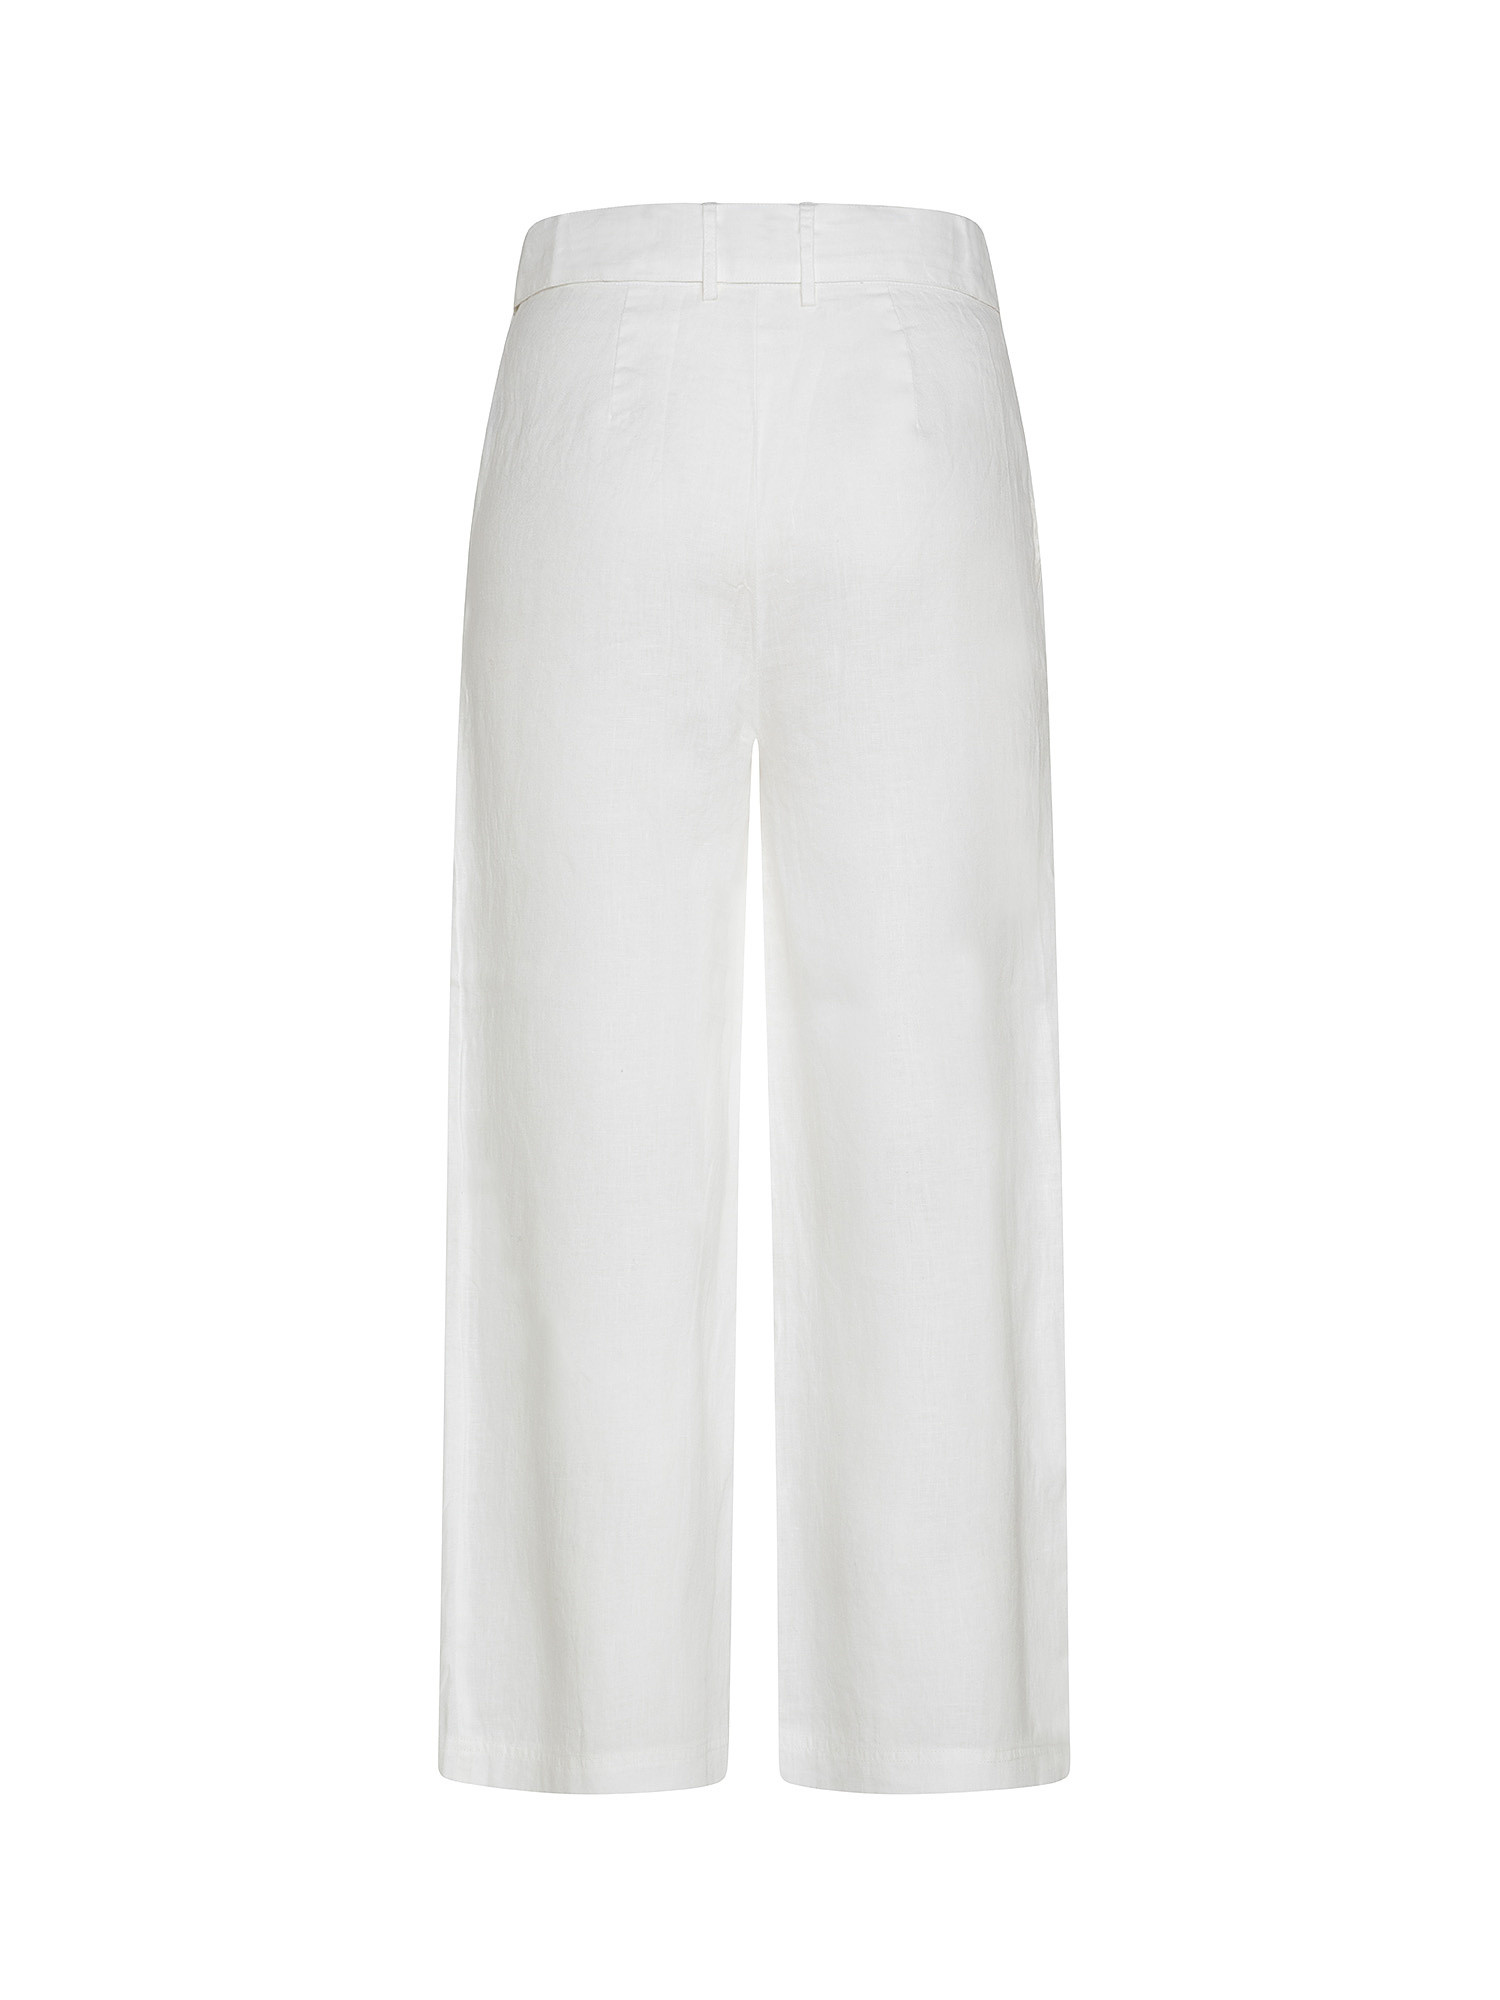 Pantalone 3/4 puro lino con cintura, Bianco, large image number 1